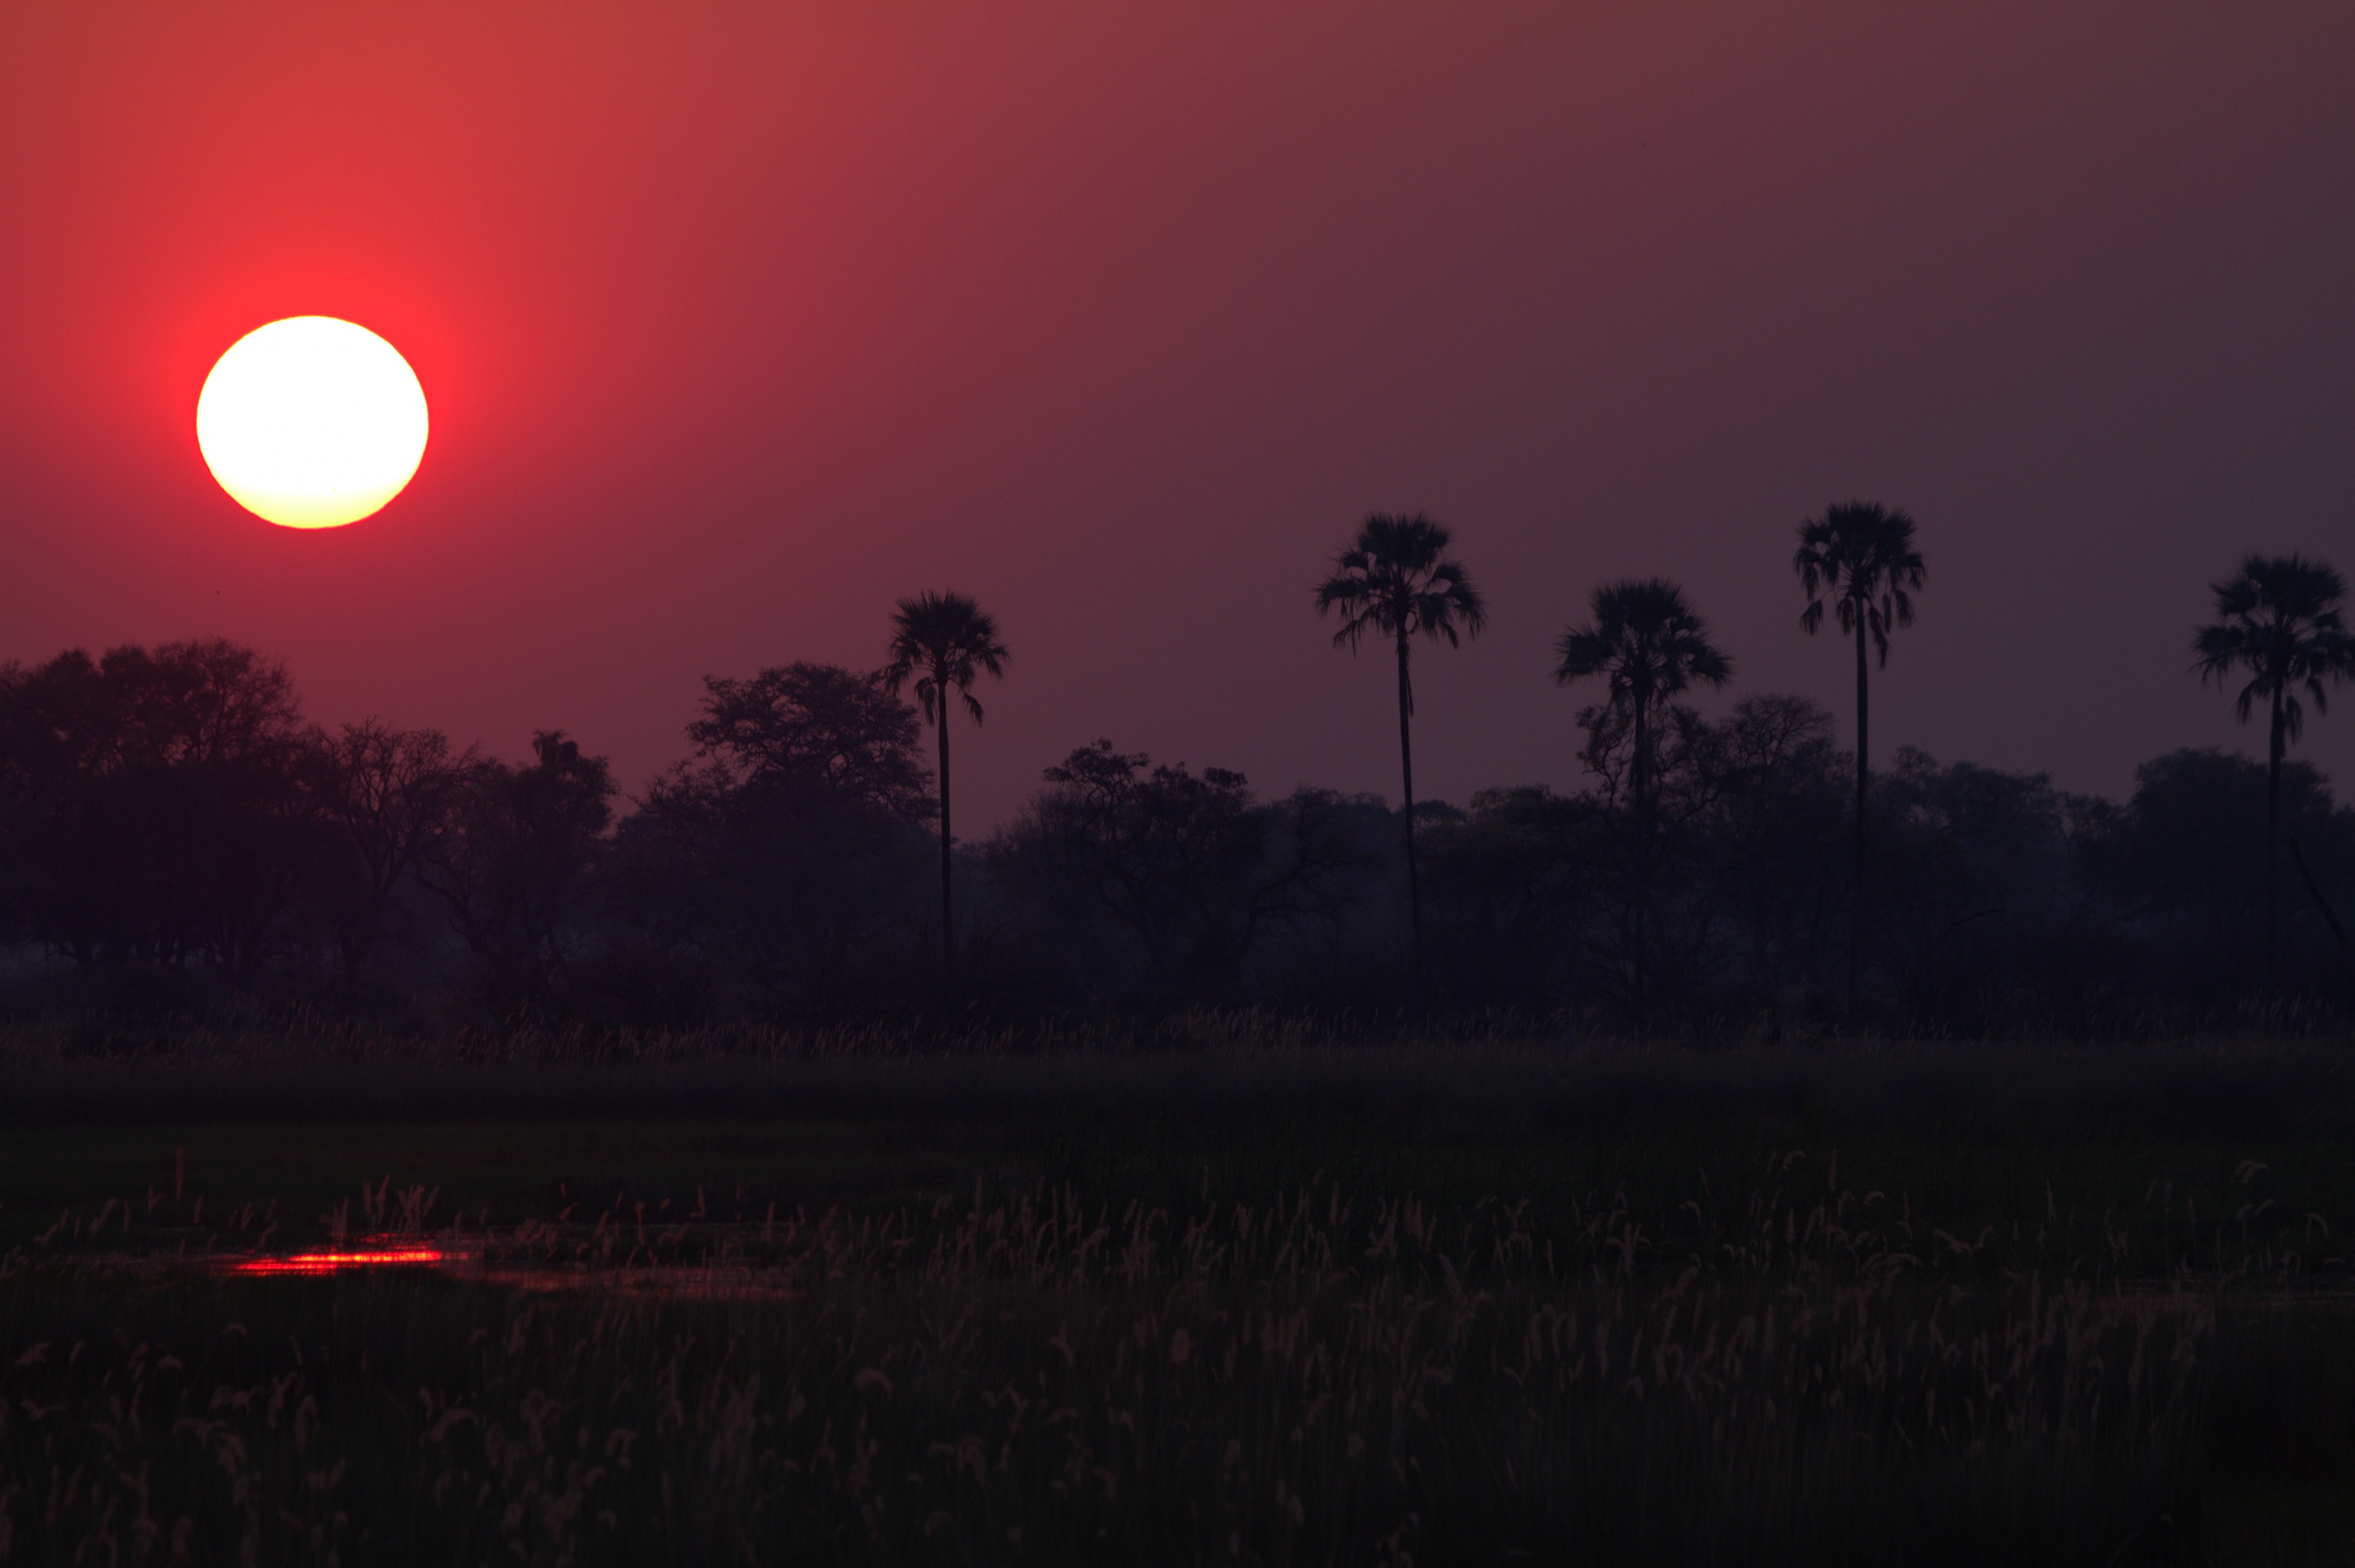 Sunset in the Okavango Delta, Botswana